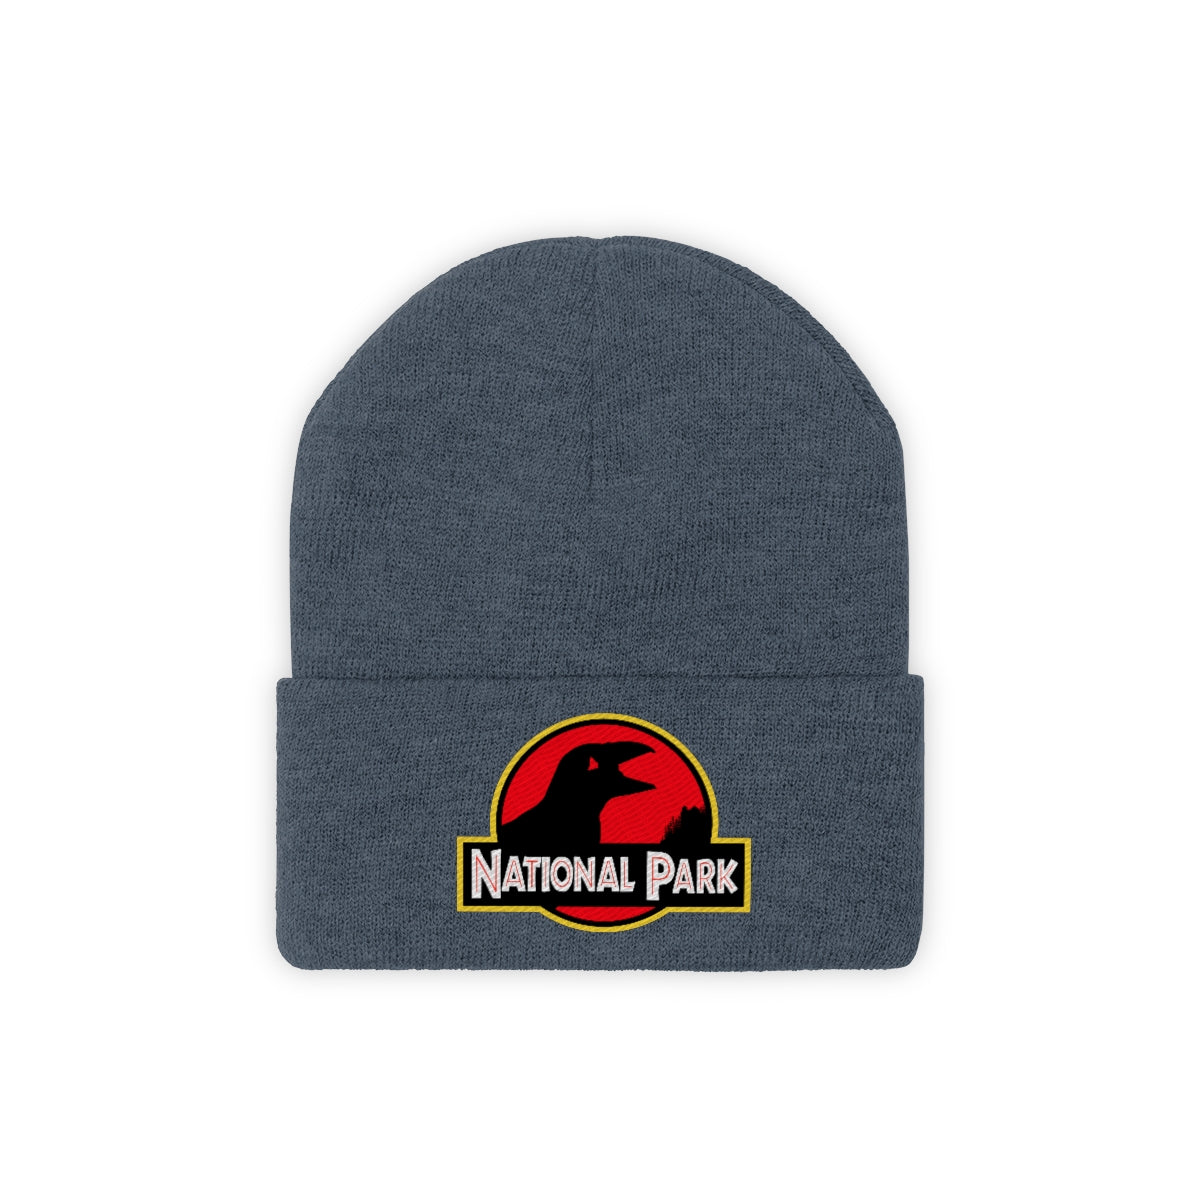 Acadia National Park Hat - Puffin Knit Beanie Sewn Parody Logo